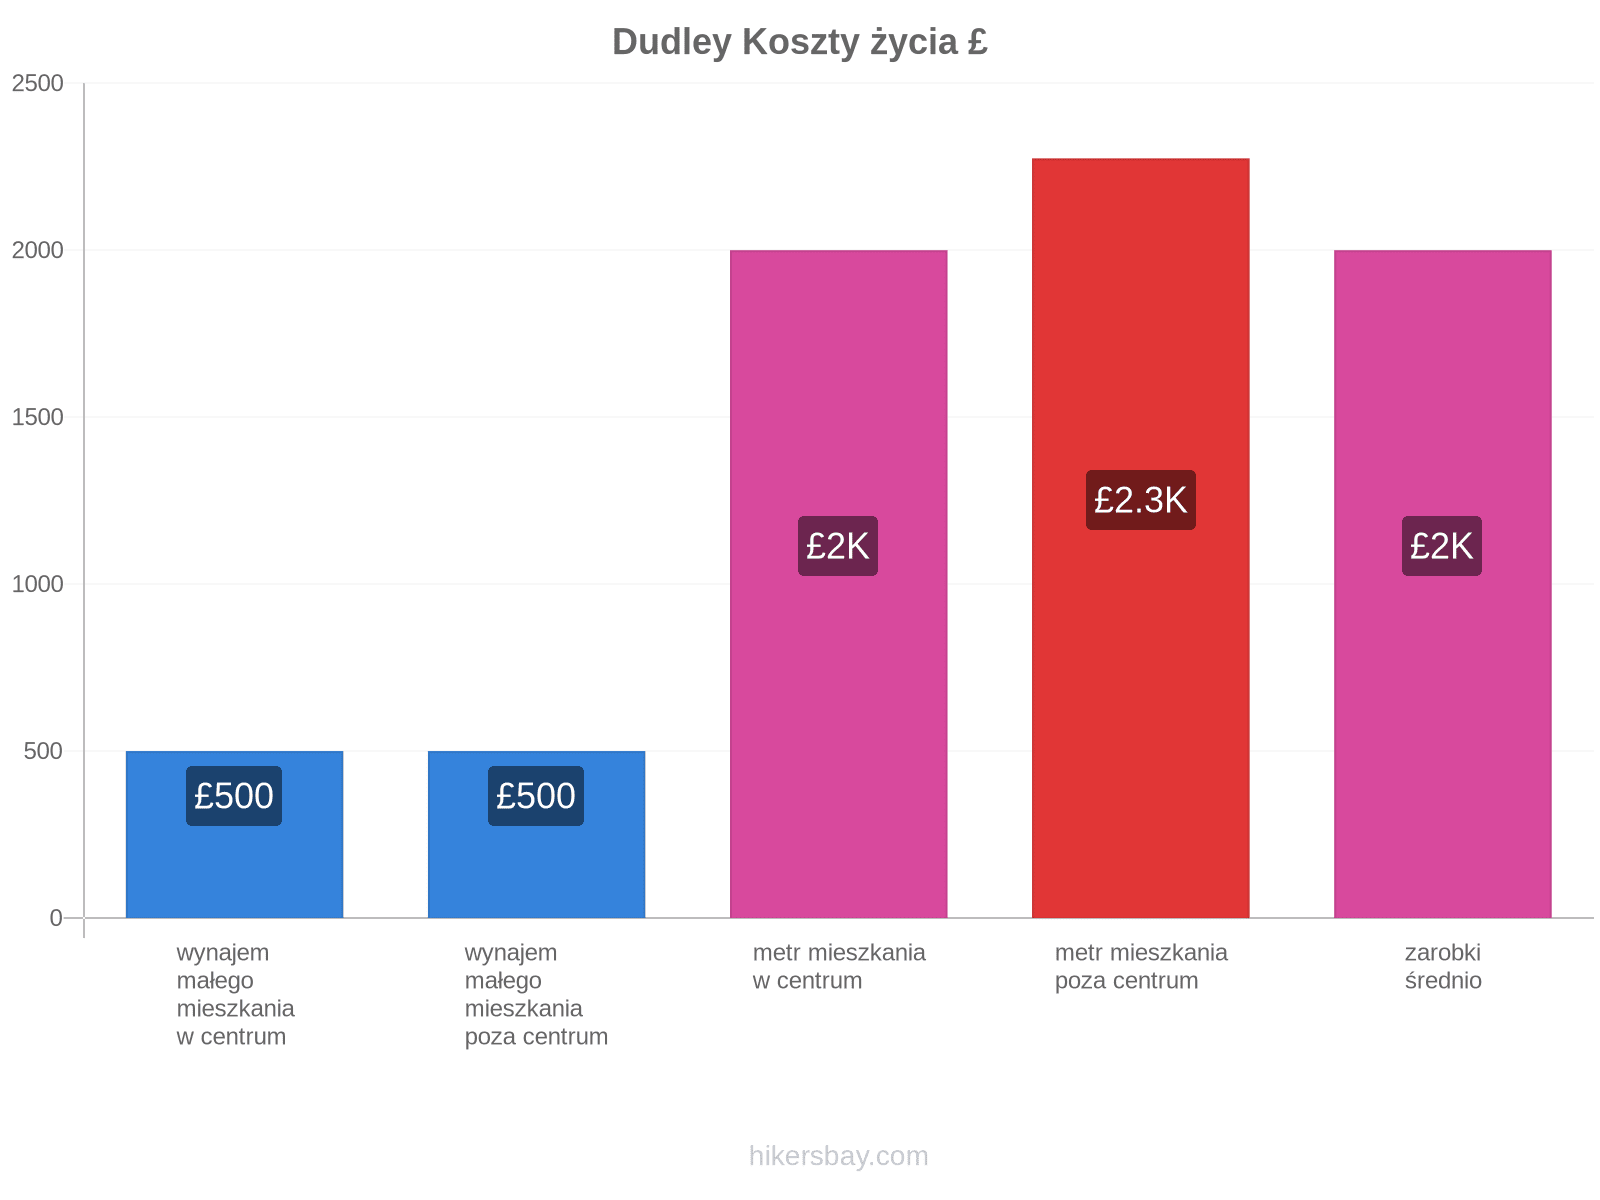 Dudley koszty życia hikersbay.com